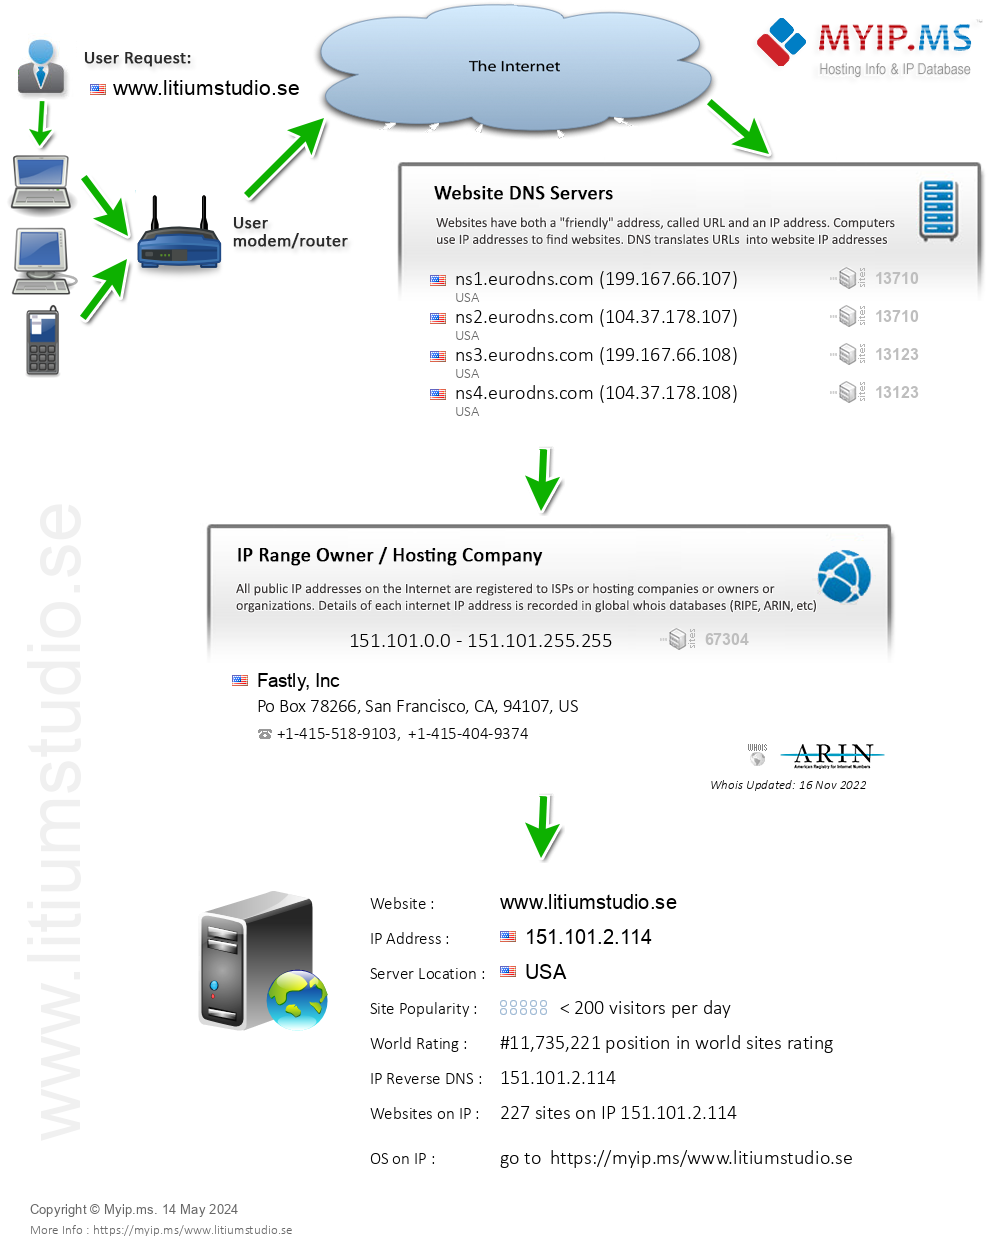 Litiumstudio.se - Website Hosting Visual IP Diagram